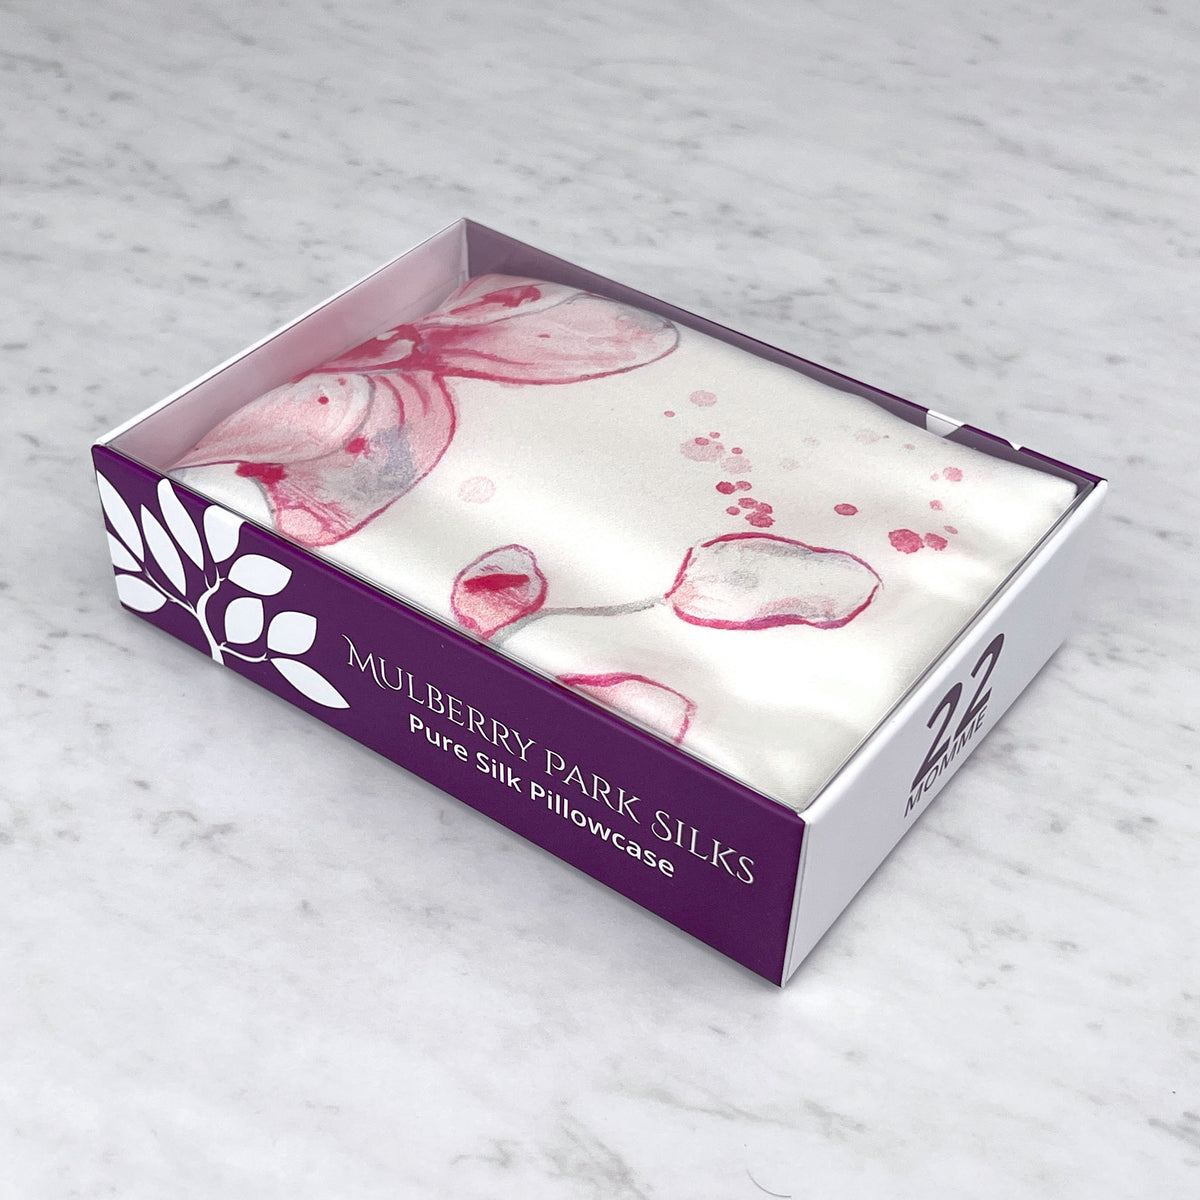 Mulberry Park Silks Pink Orchids Silk Pillowcase in a box